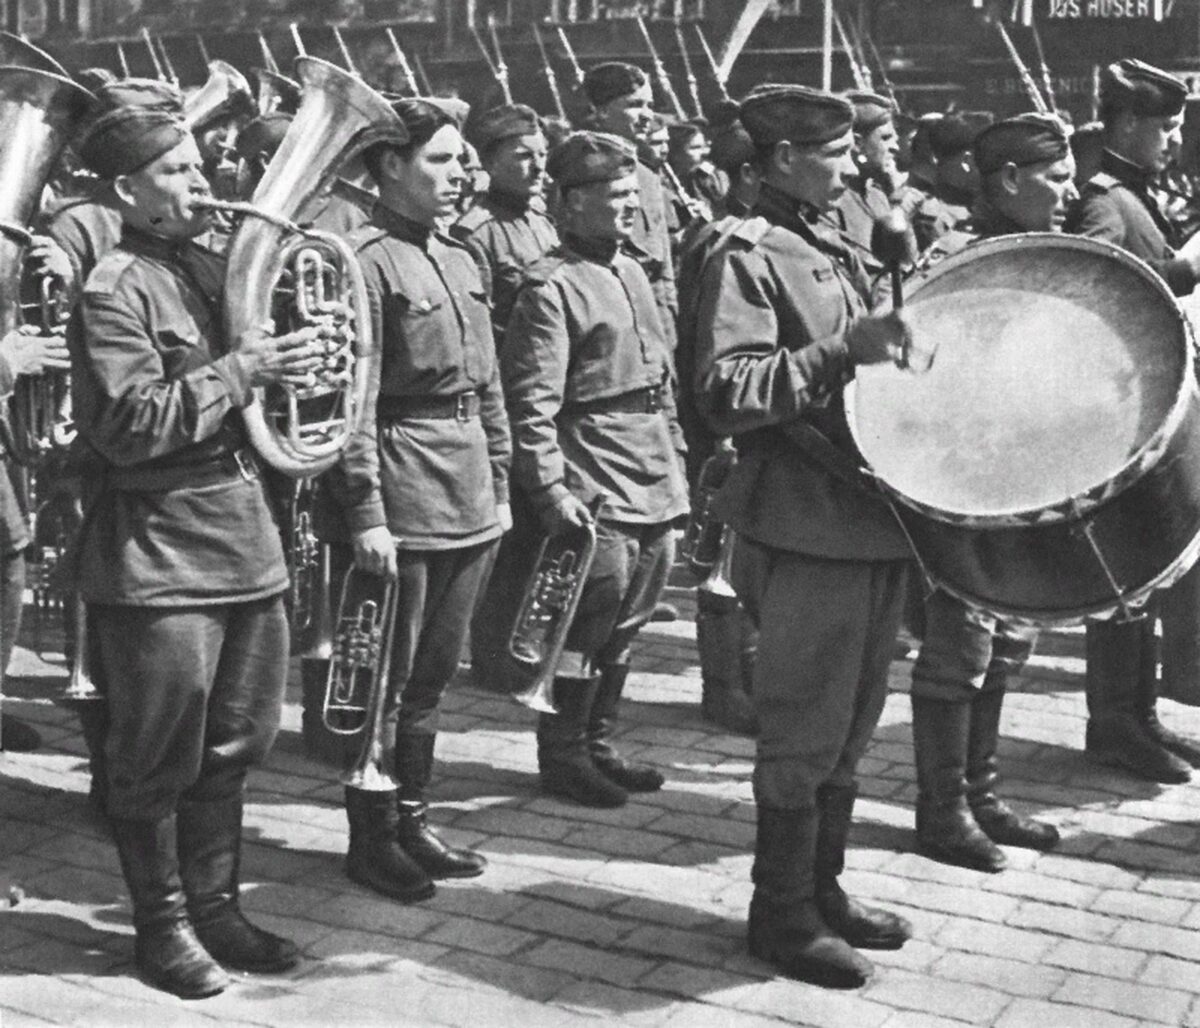 Soviet military band